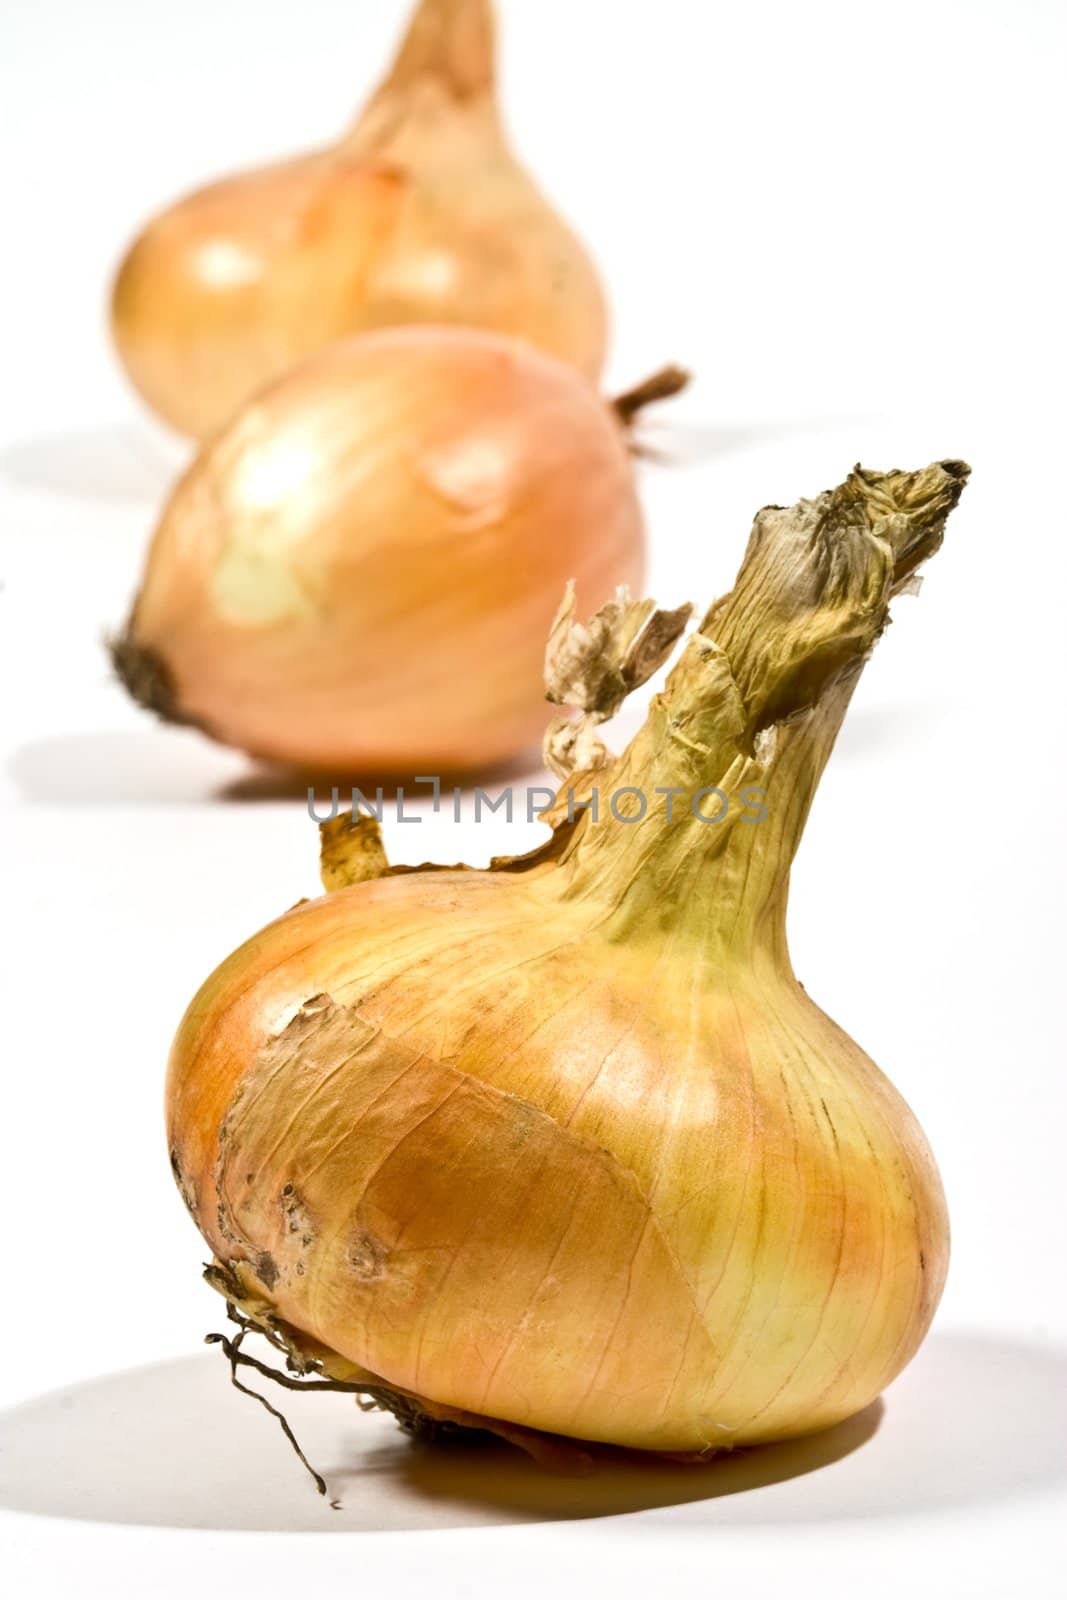 vegetable series: golden onion over white background